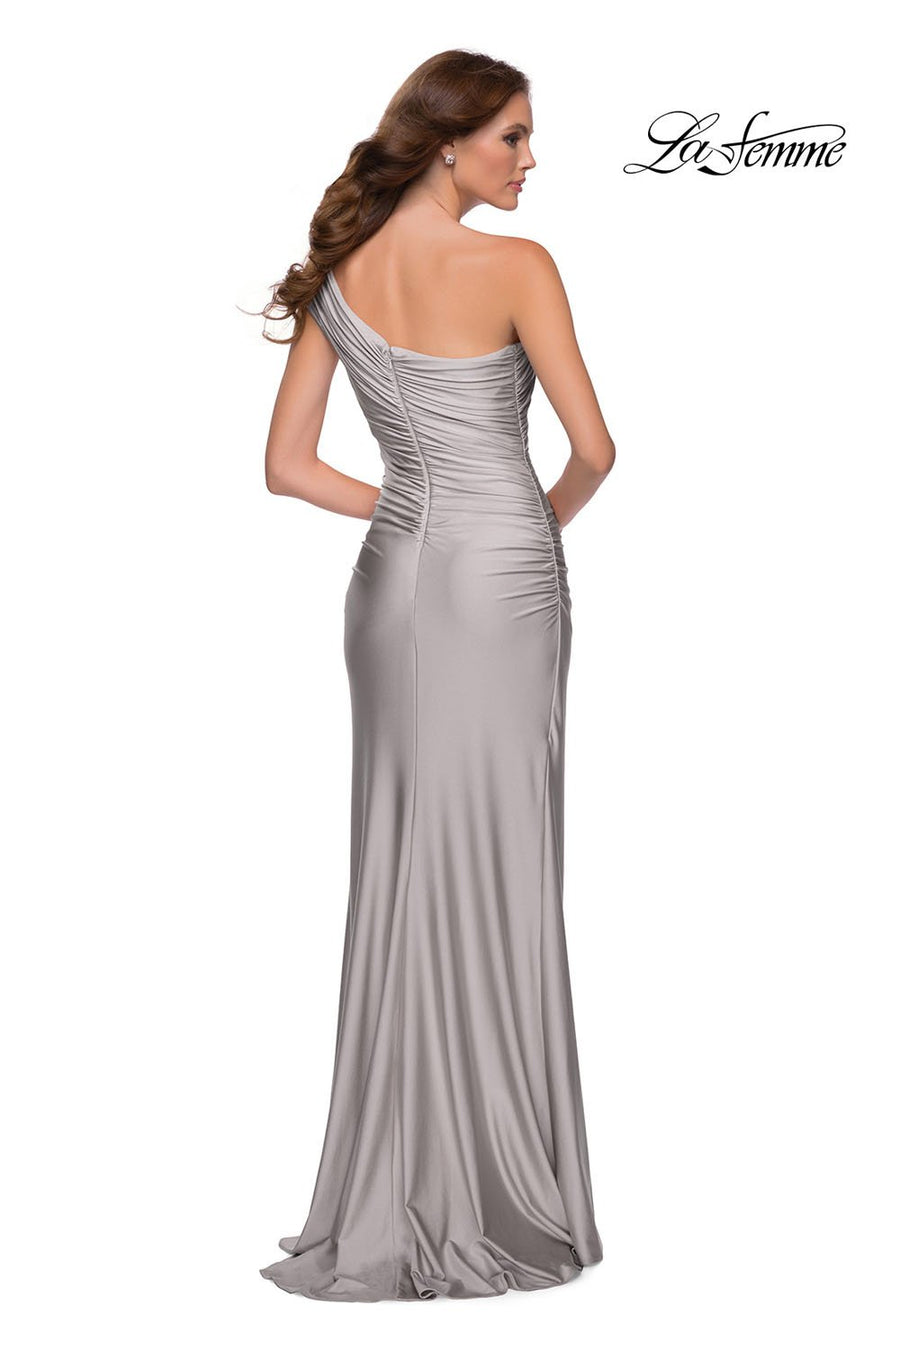 La Femme 29619 prom dress images.  La Femme 29619 is available in these colors: Black, Mauve, Navy, Silver.